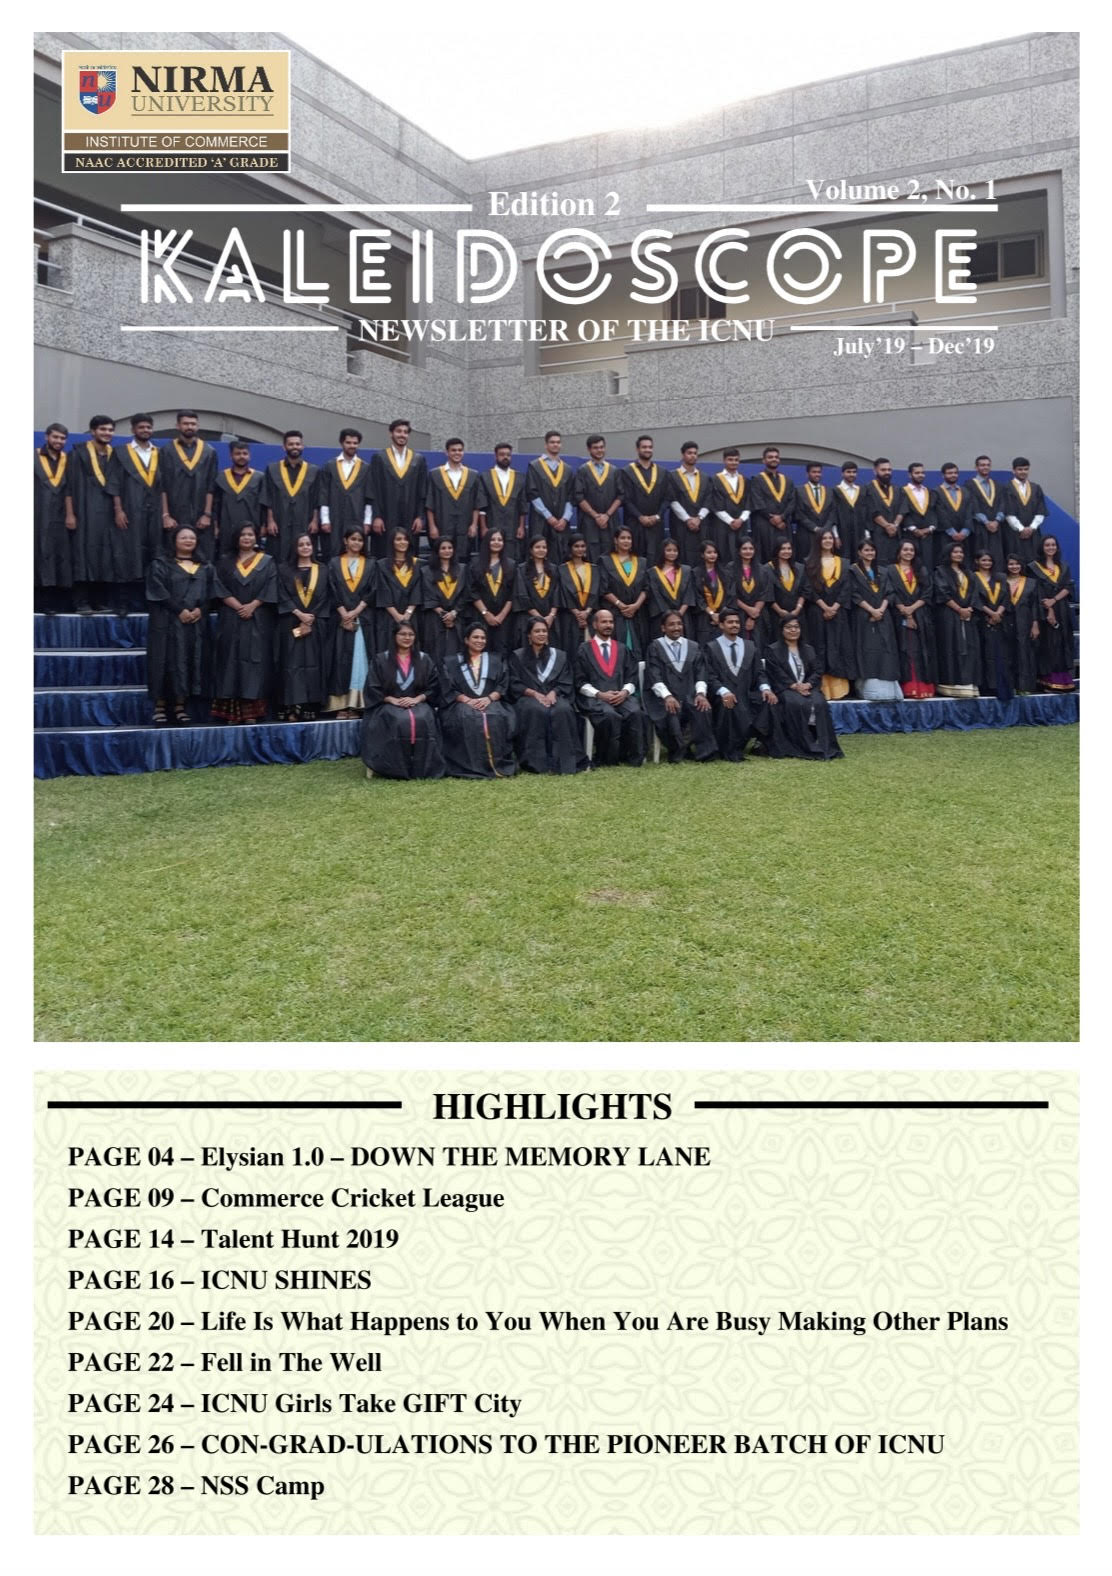 Kaleidoscope Volume 2, No. 1